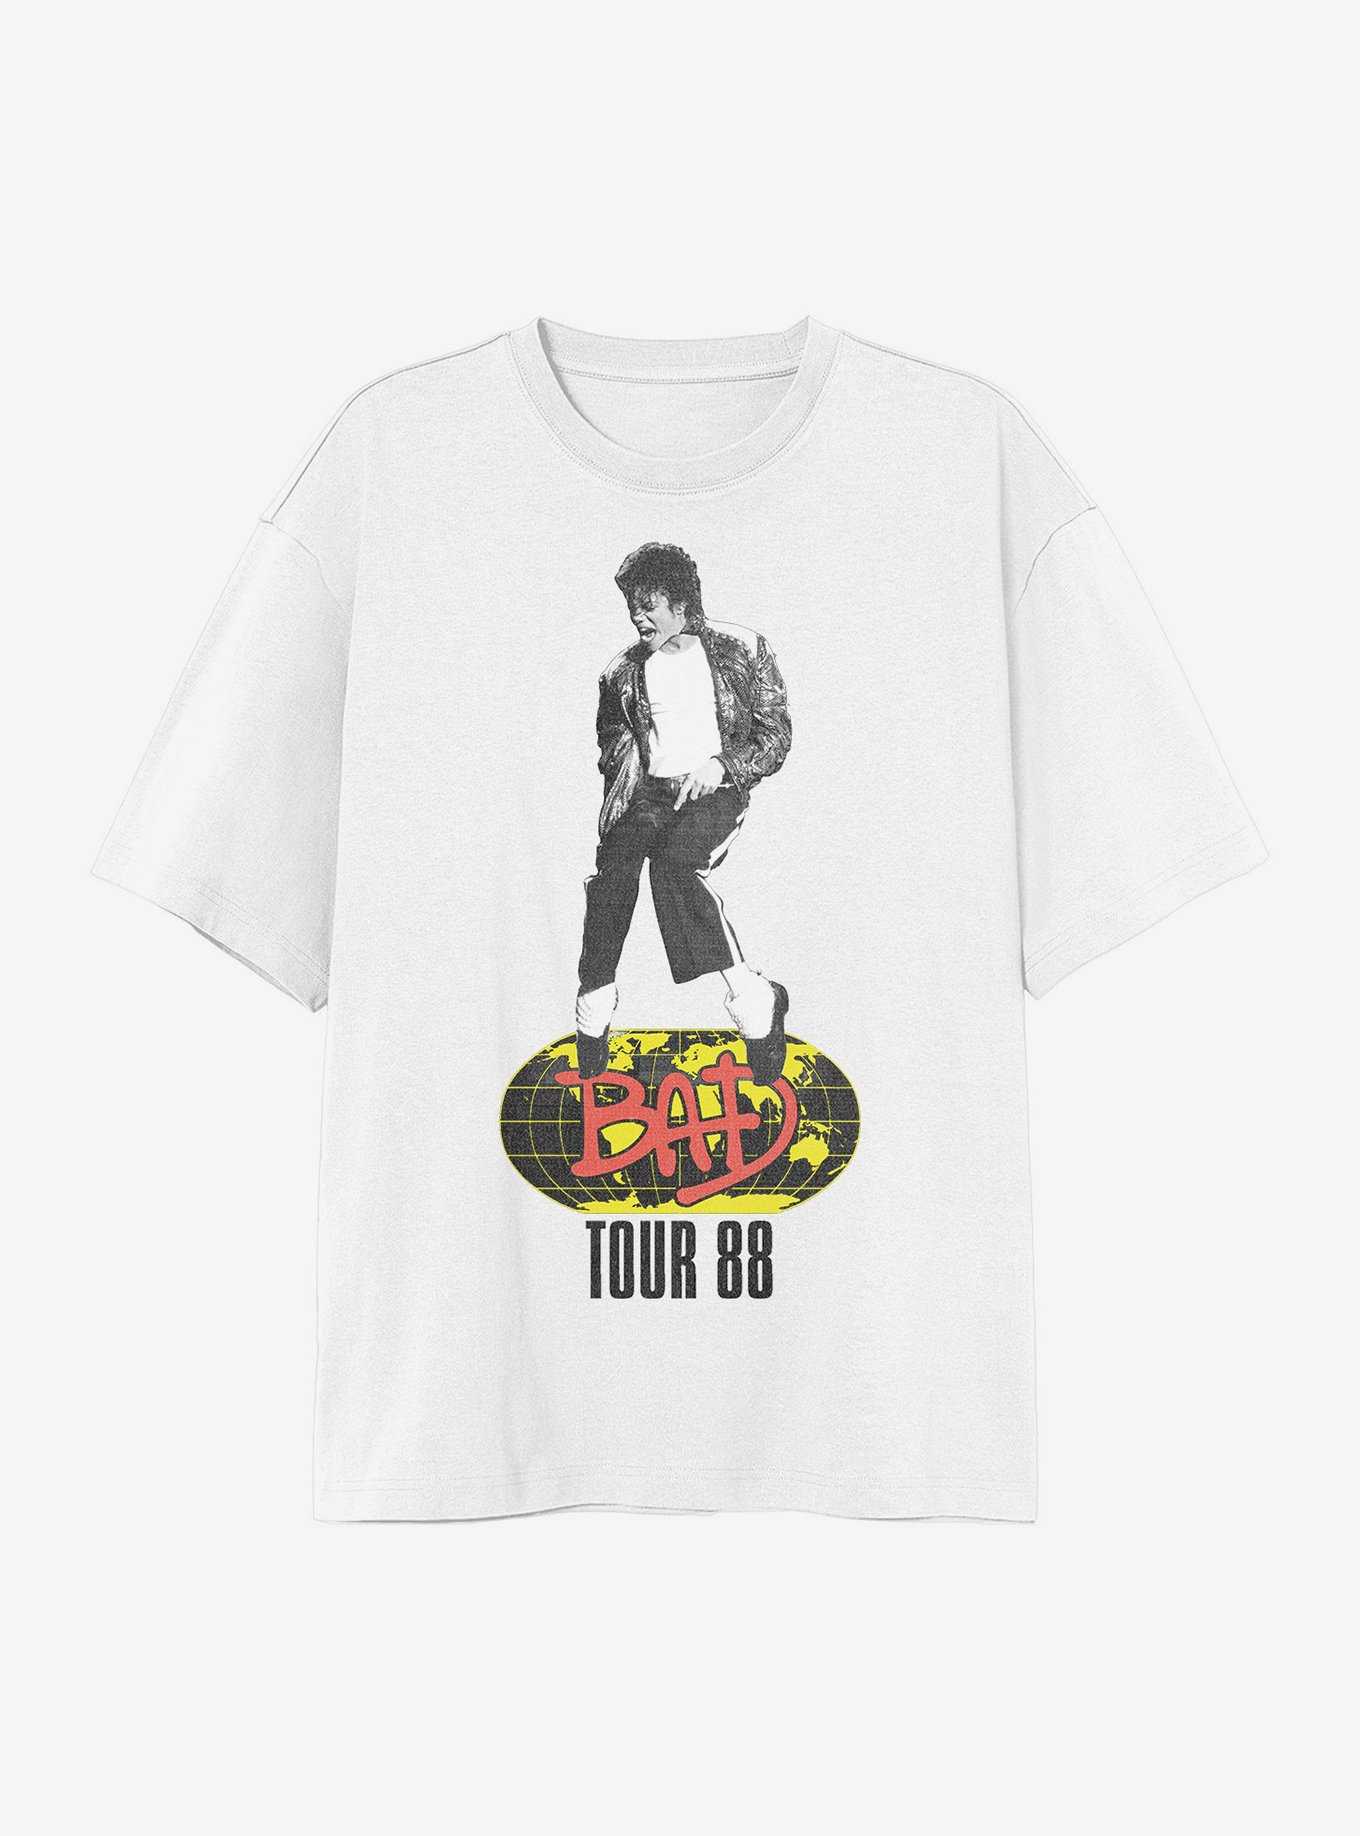 Classic Rock T-Shirts, Shirts & Tees